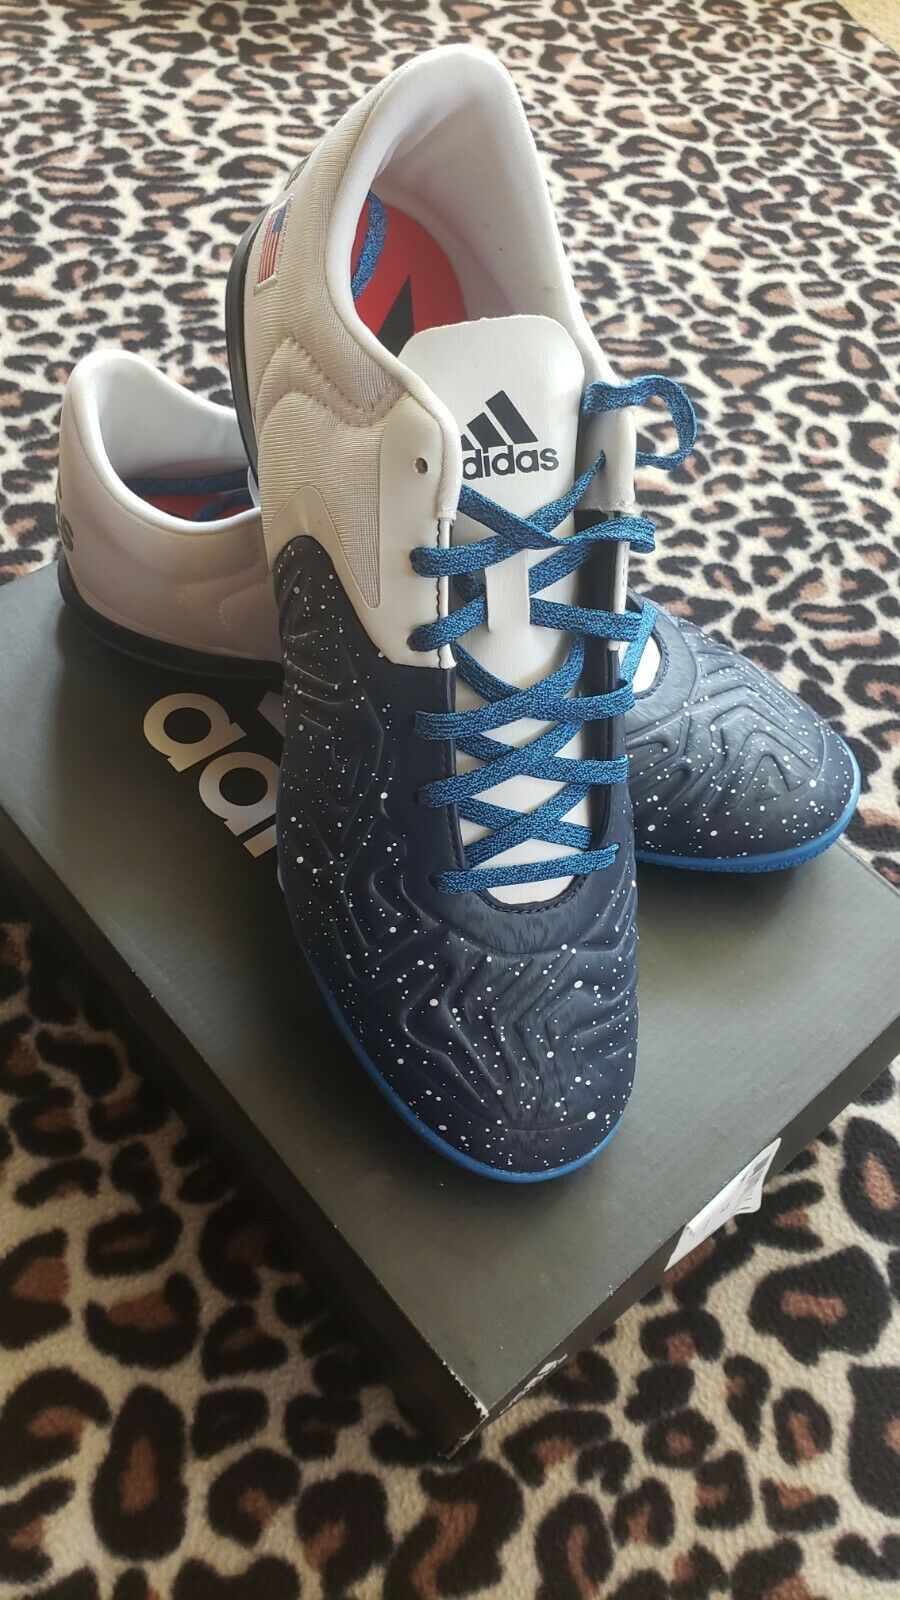 Adidas X 15.2 Court Soccer U.S.A. Shoes